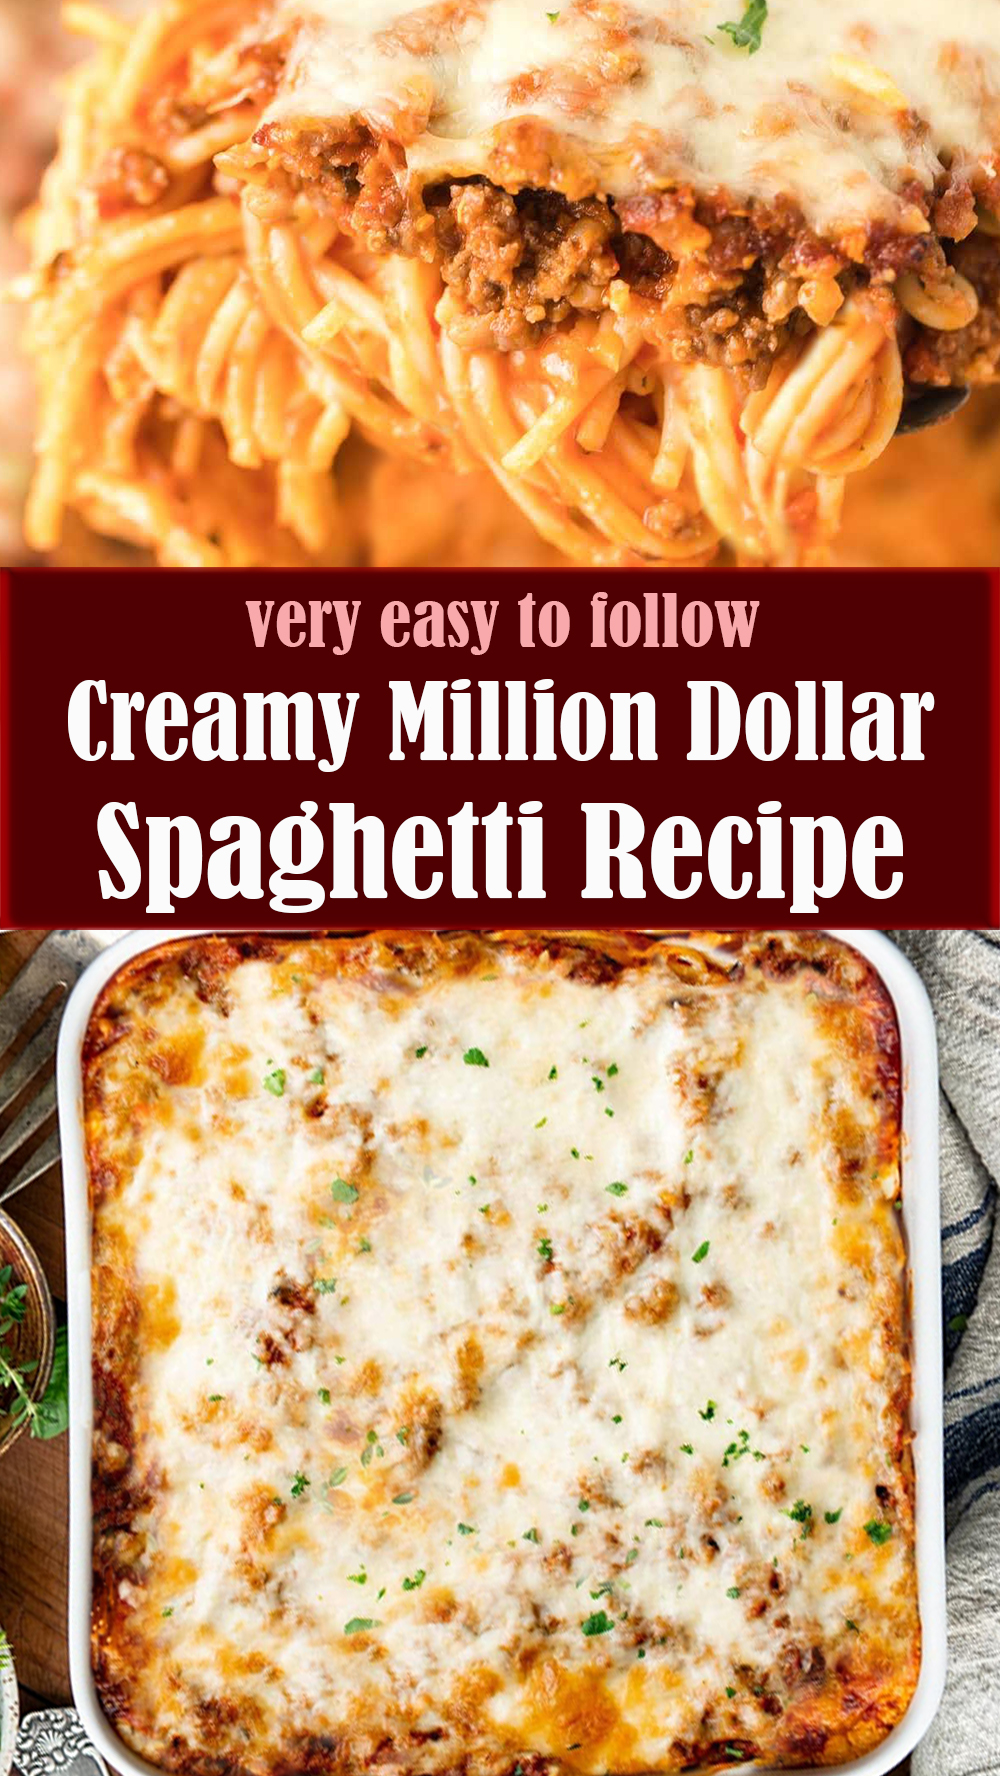 Creamy Million Dollar Spaghetti Recipe